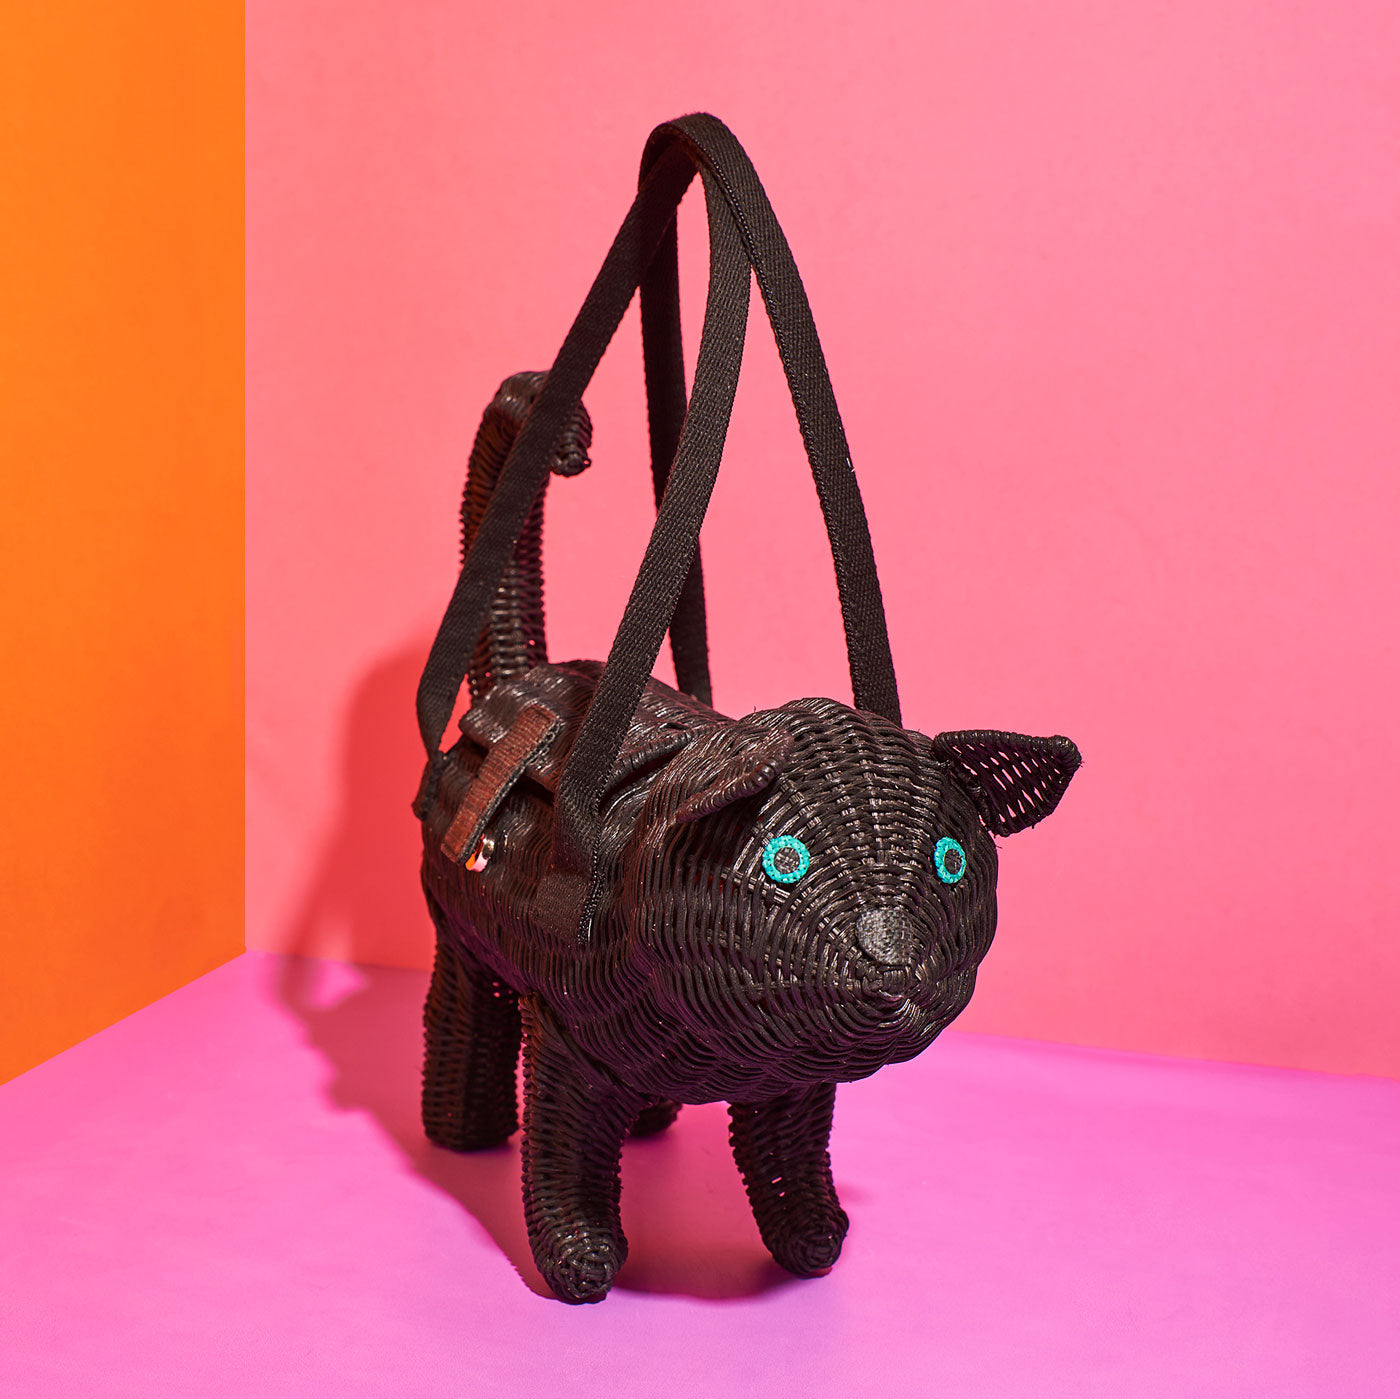 Wicker Darling's Vince the black cat handbag on a vibrant background